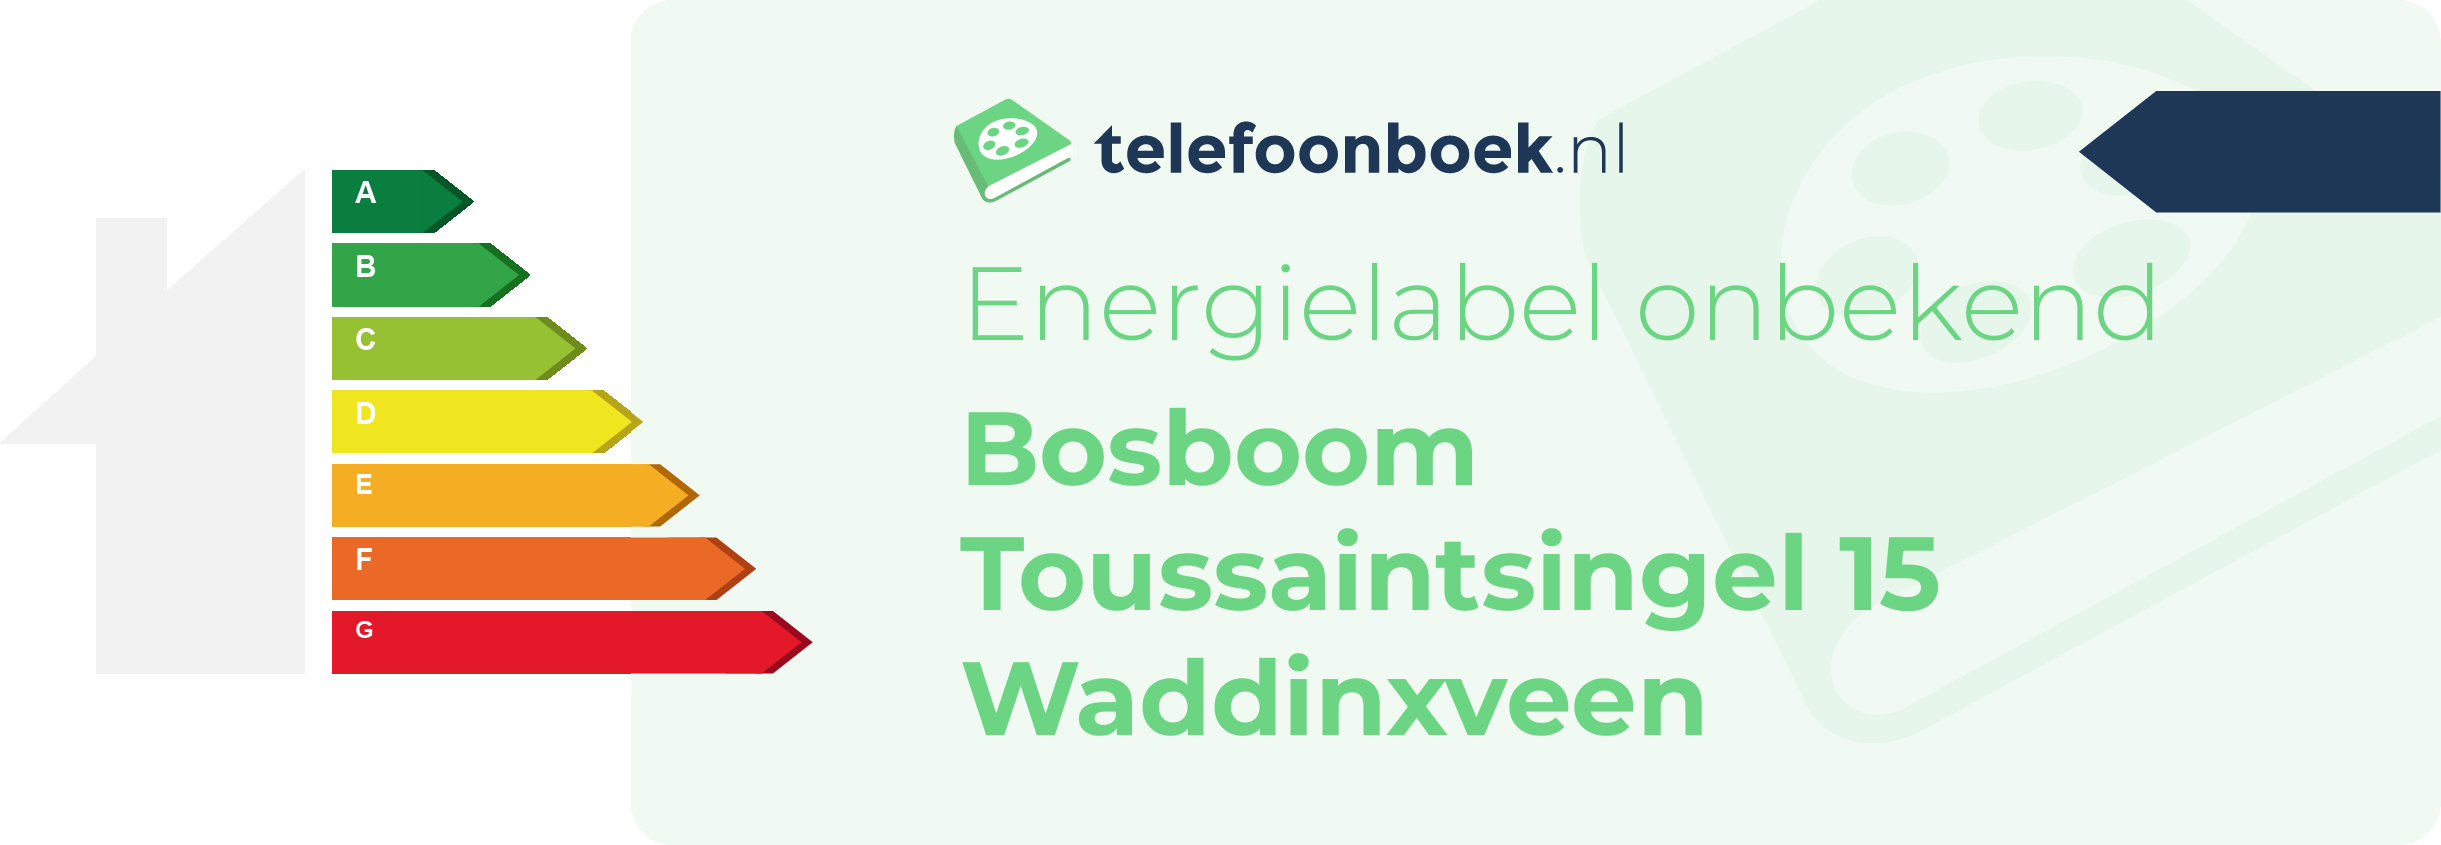 Energielabel Bosboom Toussaintsingel 15 Waddinxveen